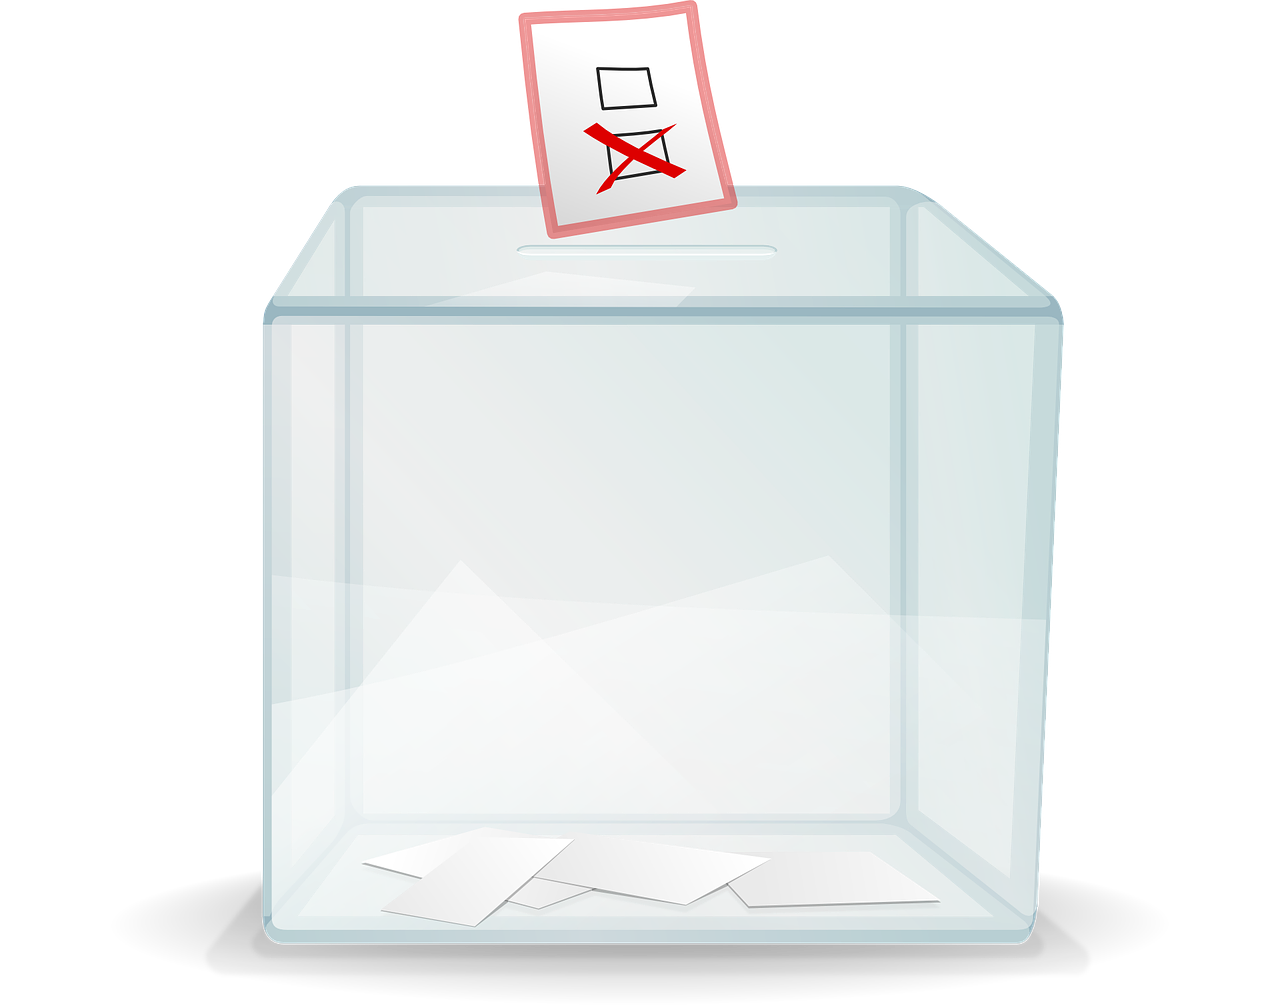 http://m.82-200.pl/2018/02/orig/ballot-box-32384-1280-2503.png